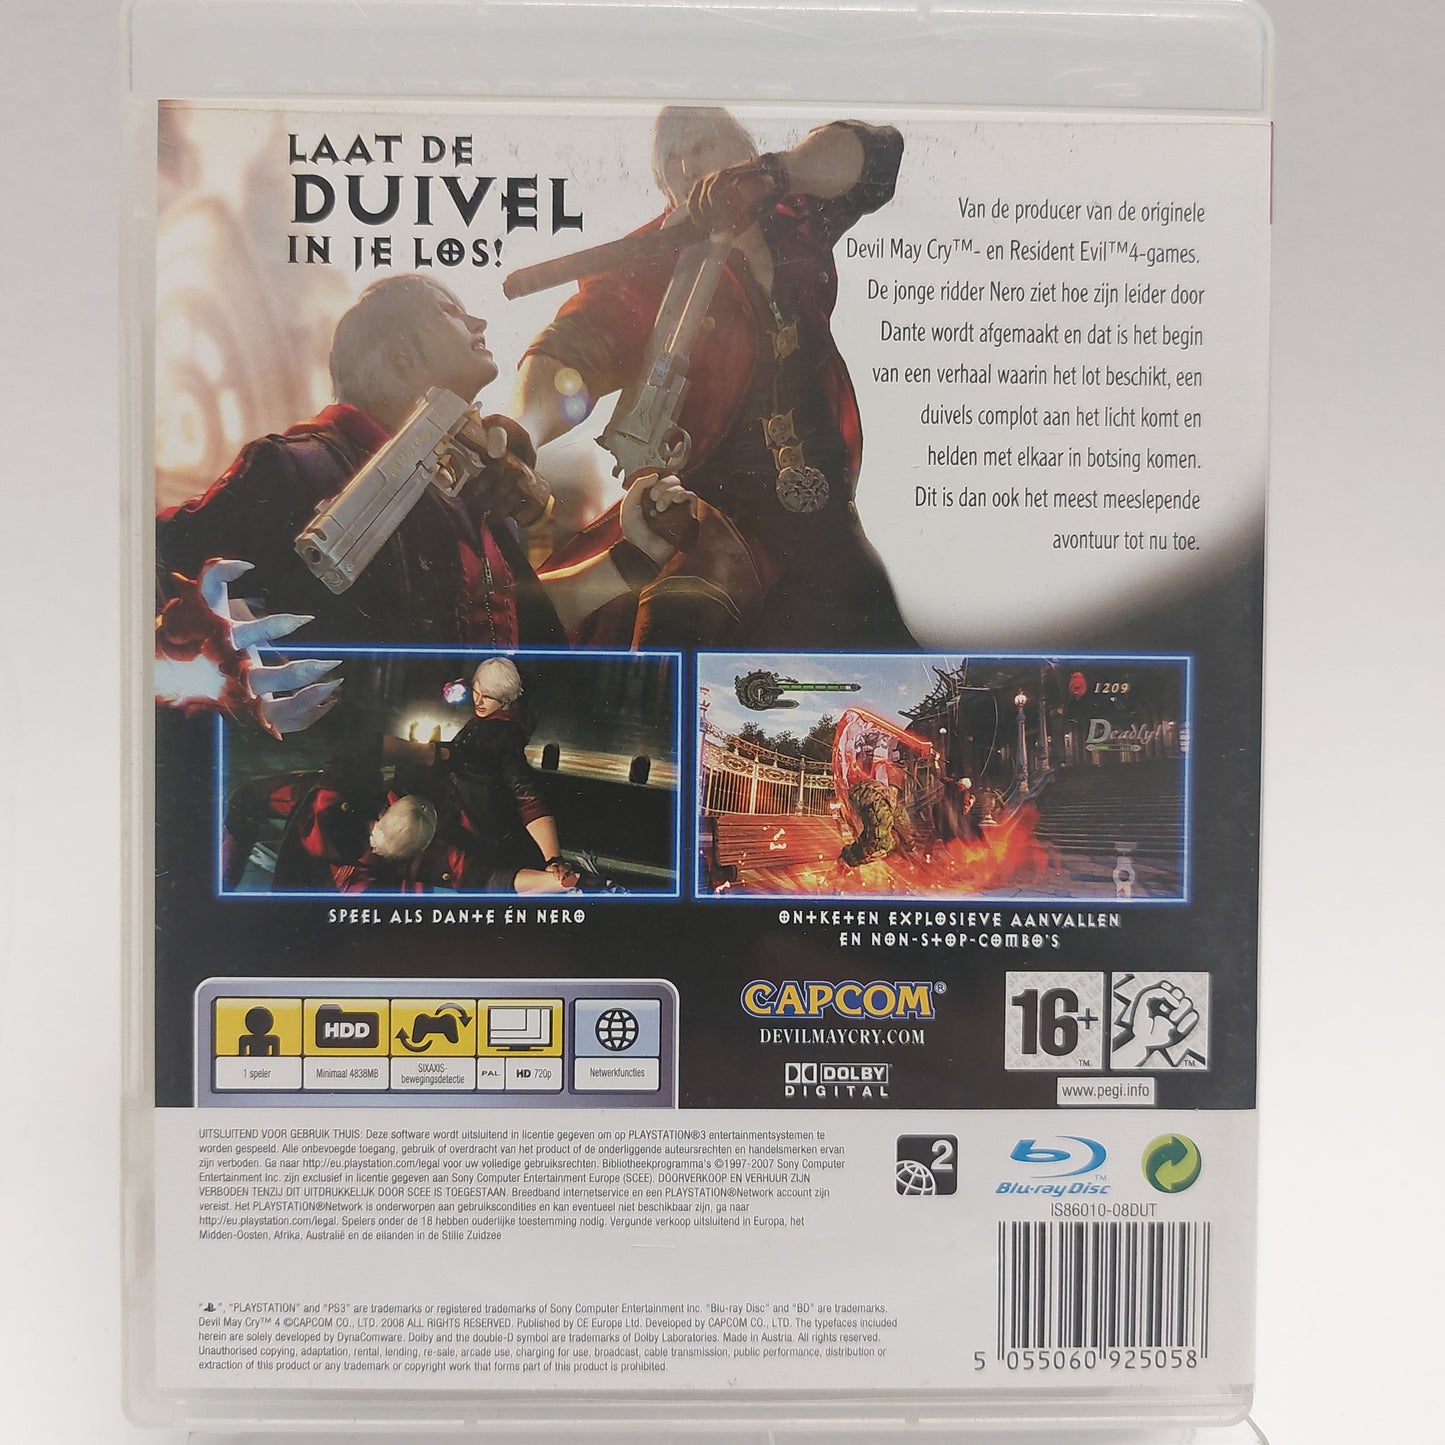 Devil May Cry 4 Playstation 3